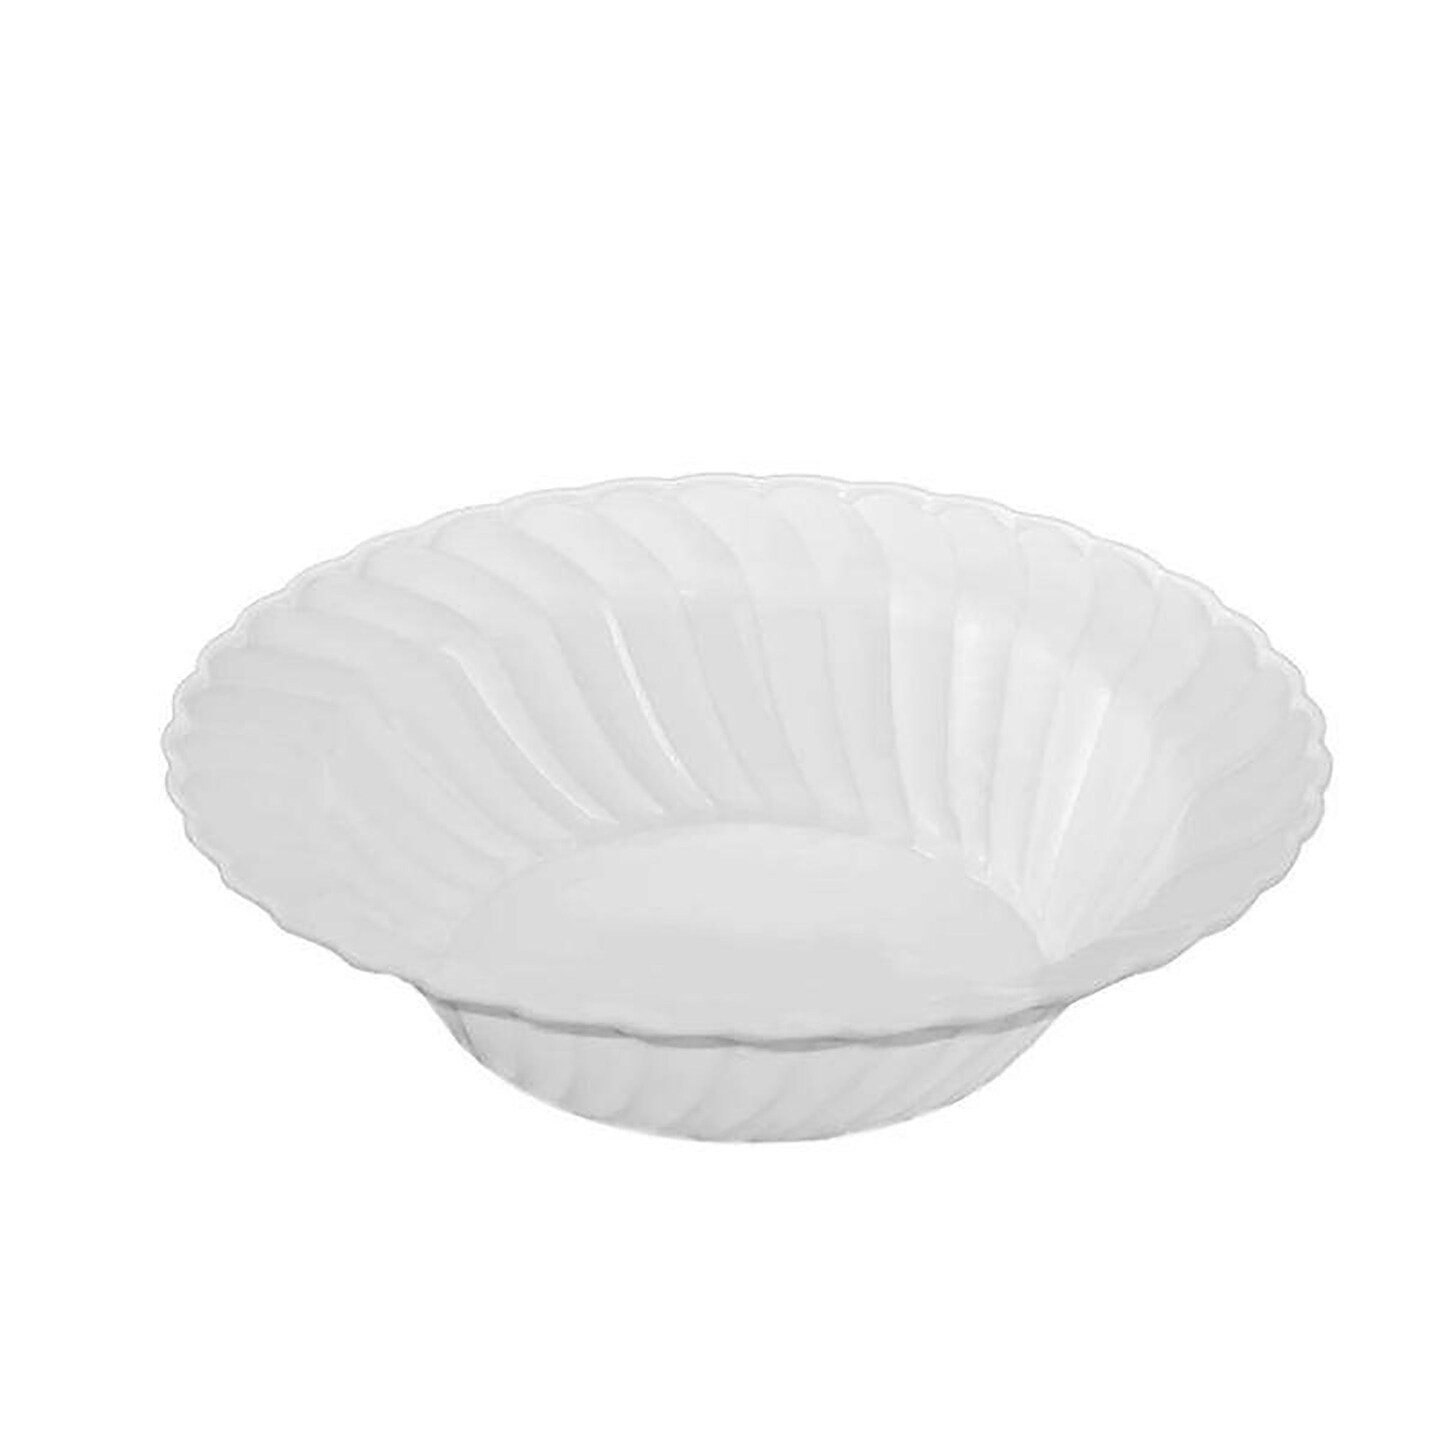 White Flair Plastic Dessert Bowls - 5 Ounce (180 Bowls)